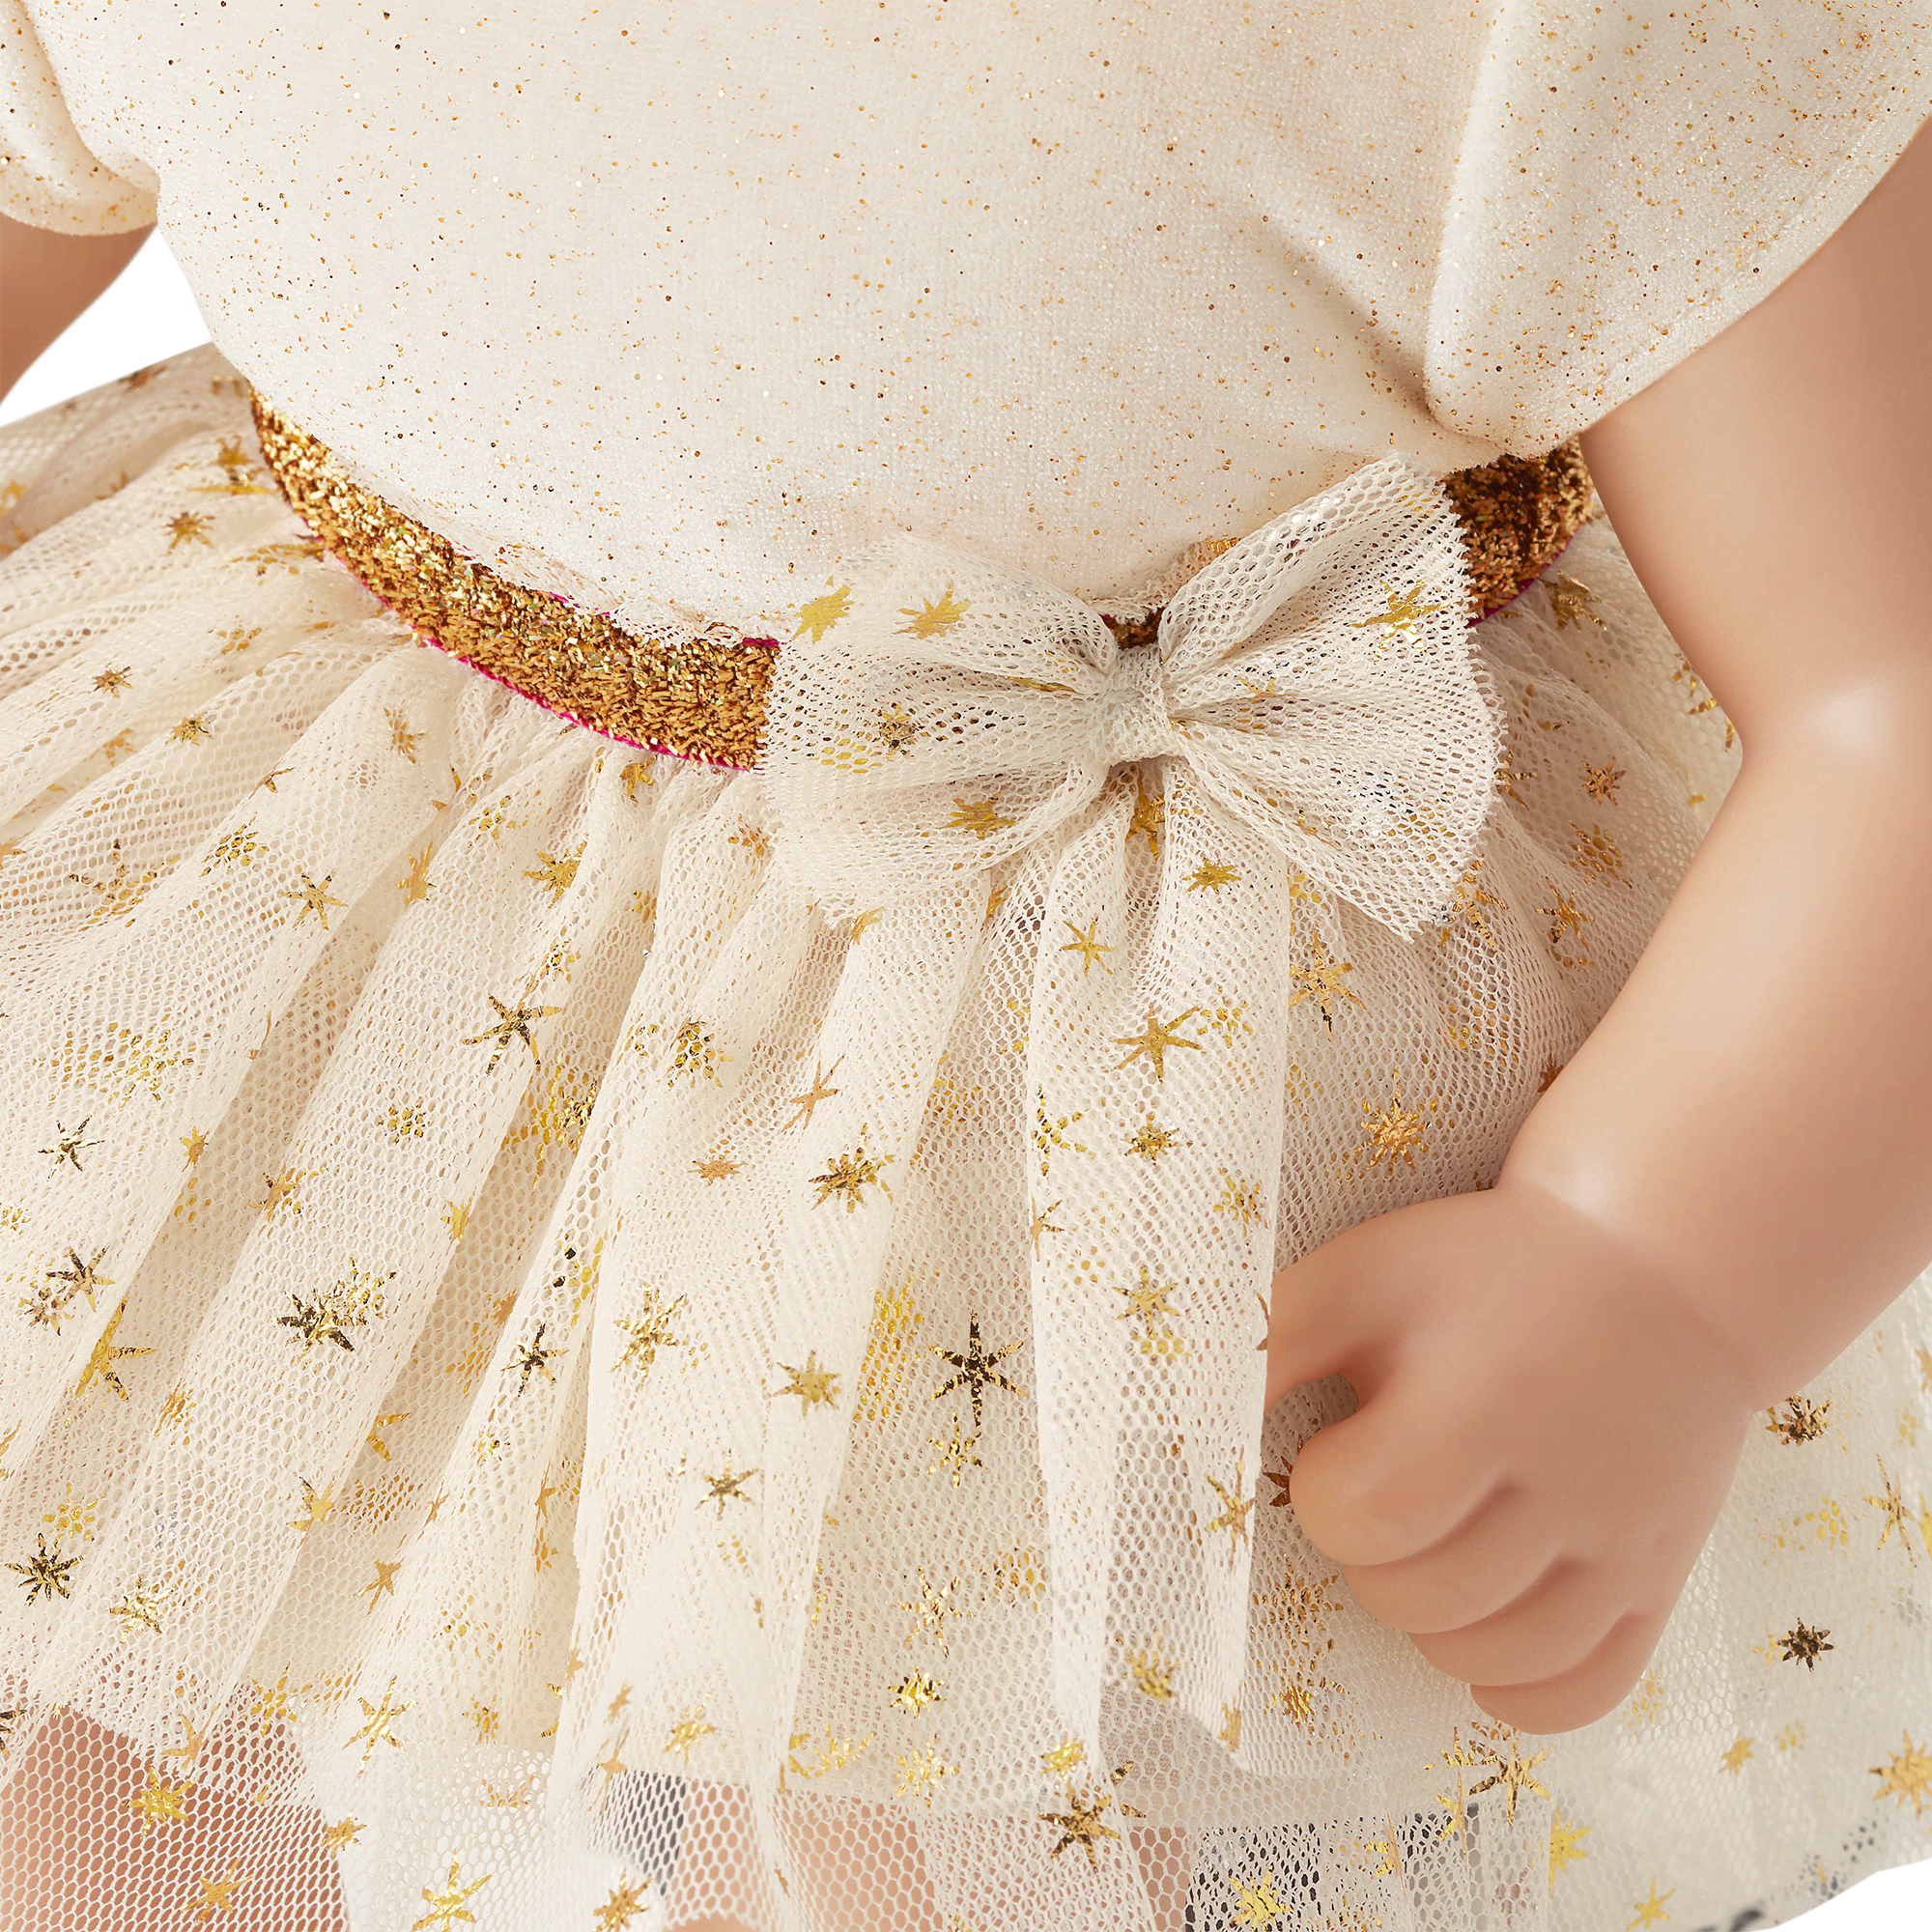 Golden Twinkle Dress for Little Girls & Bitty Baby Dolls